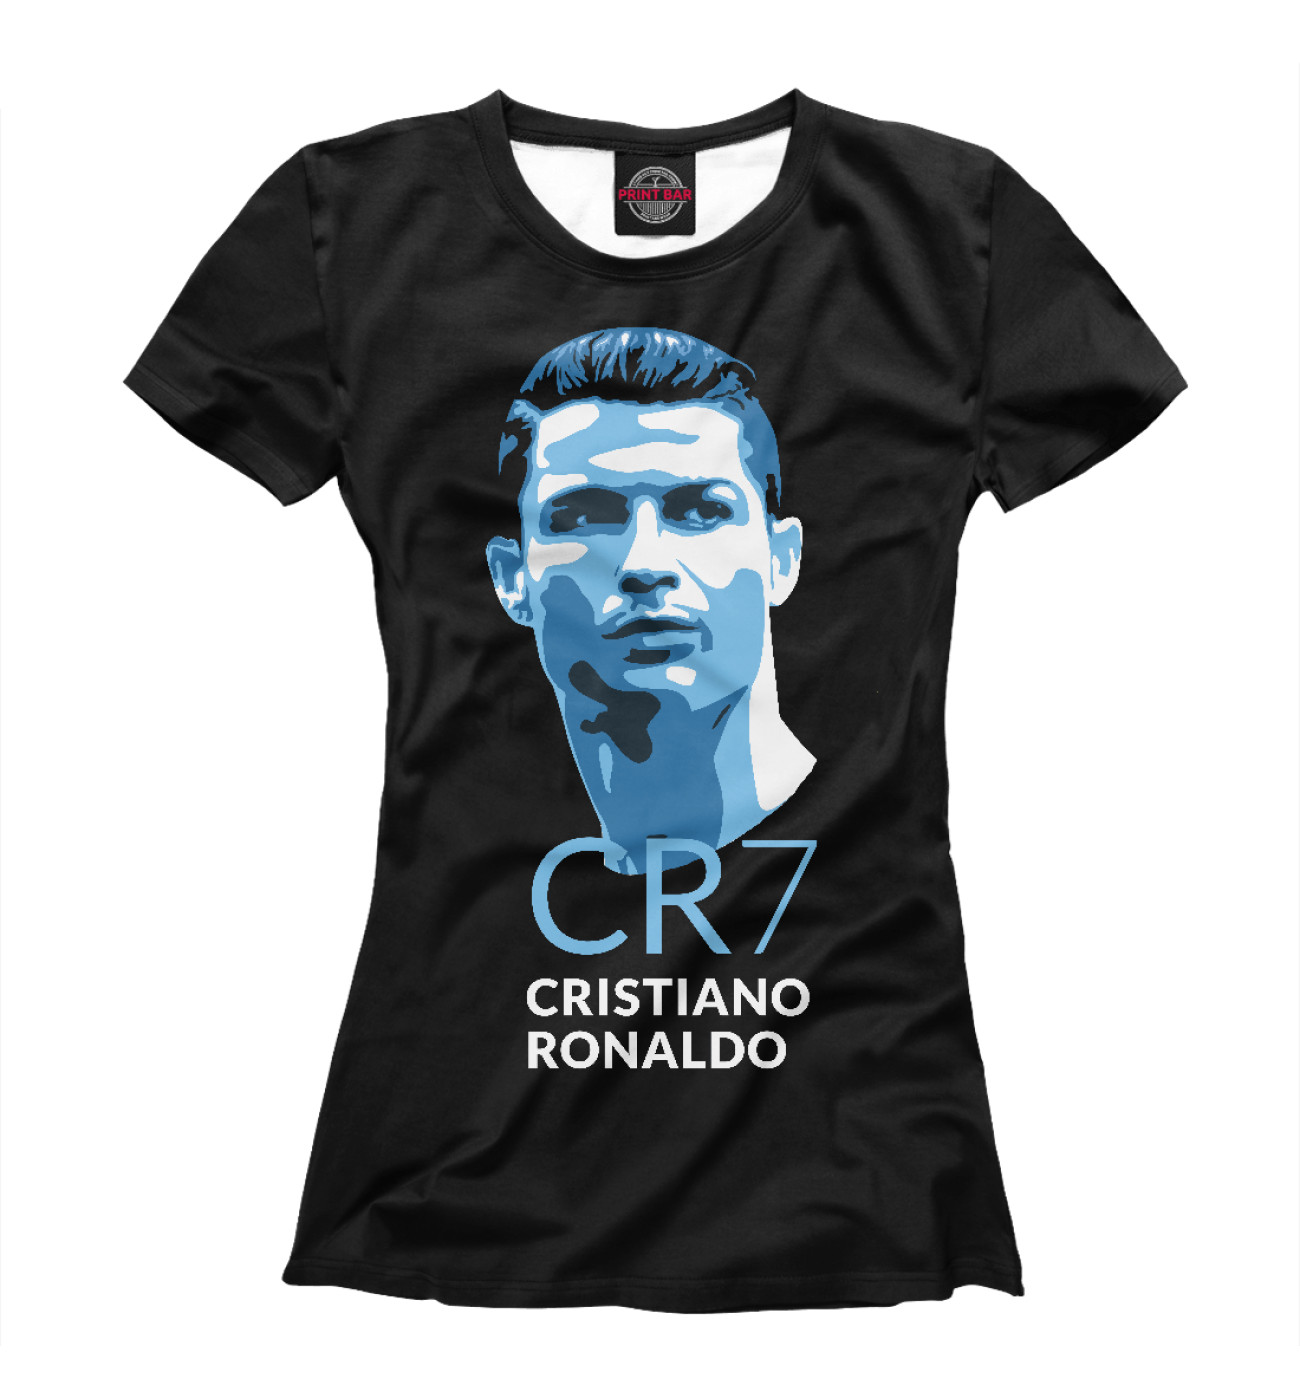 Женская Футболка Cristiano Ronaldo, артикул: CRR-508879-fut-1